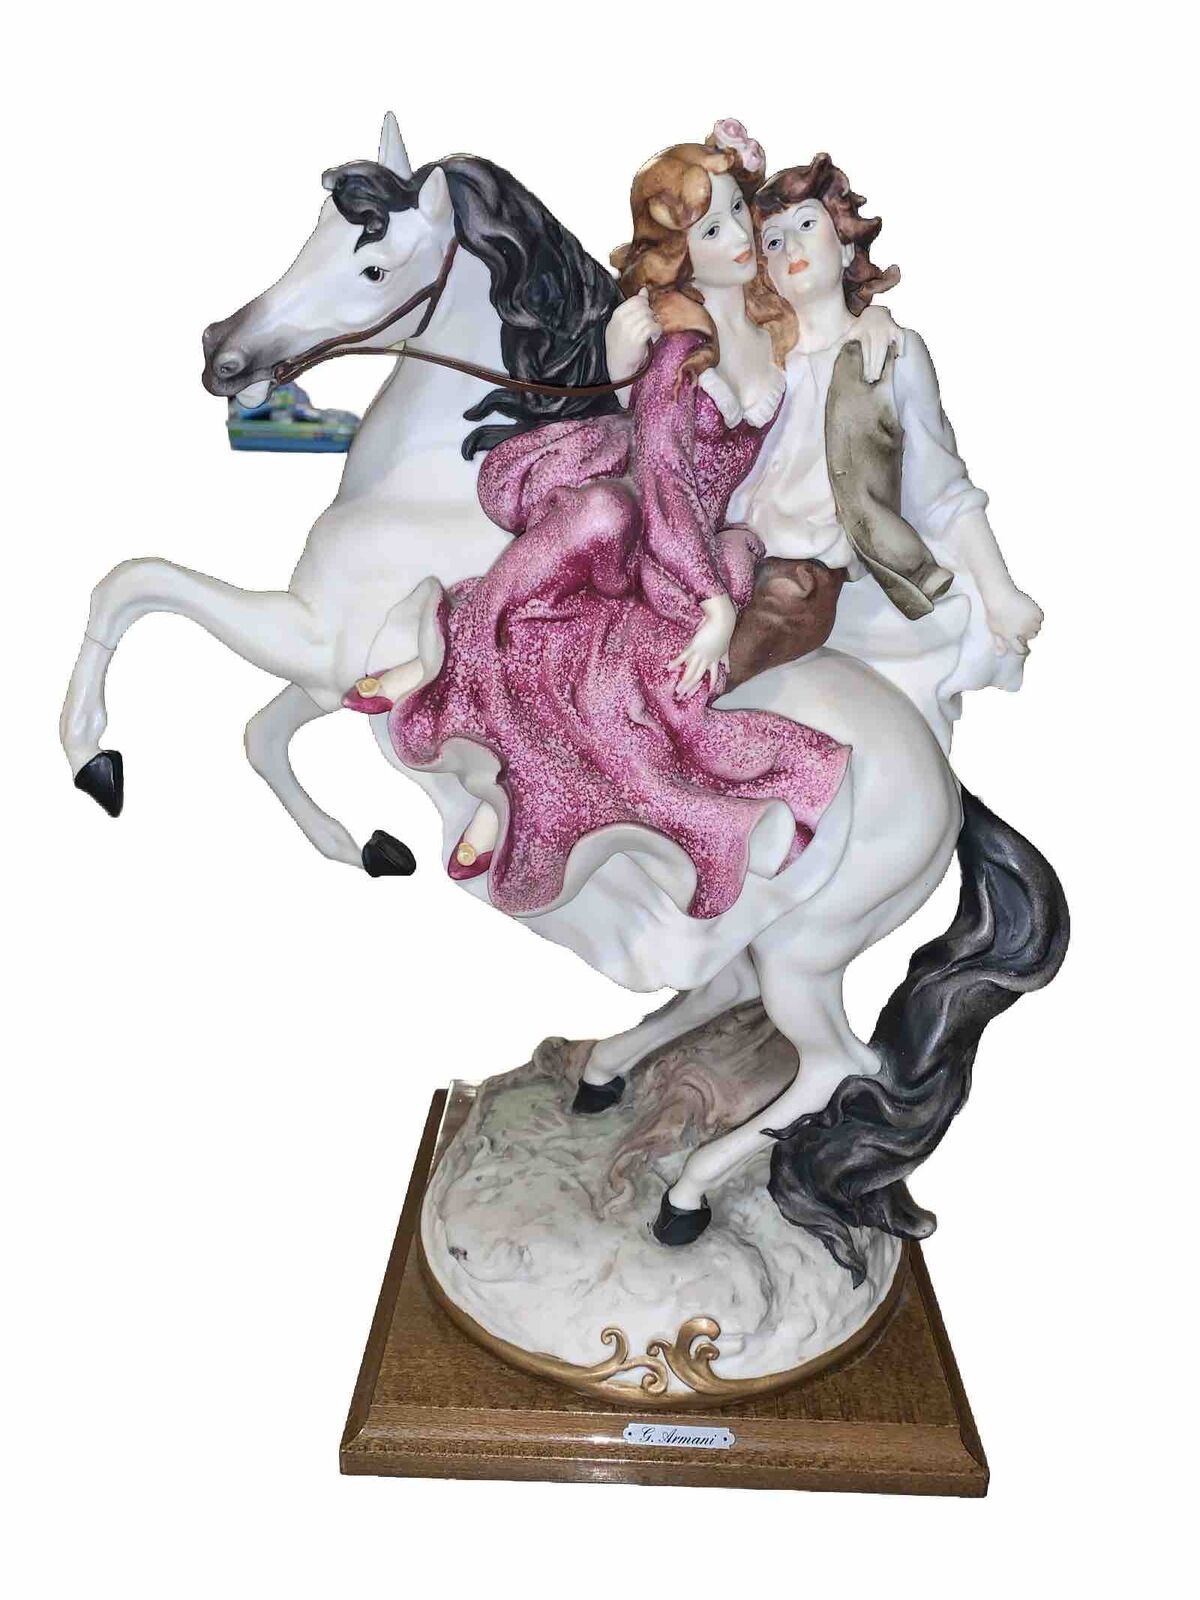 Capodimonte  Giuseppe Armani Sculpture 1983  Signed 625 C  Couples on Horse Rare